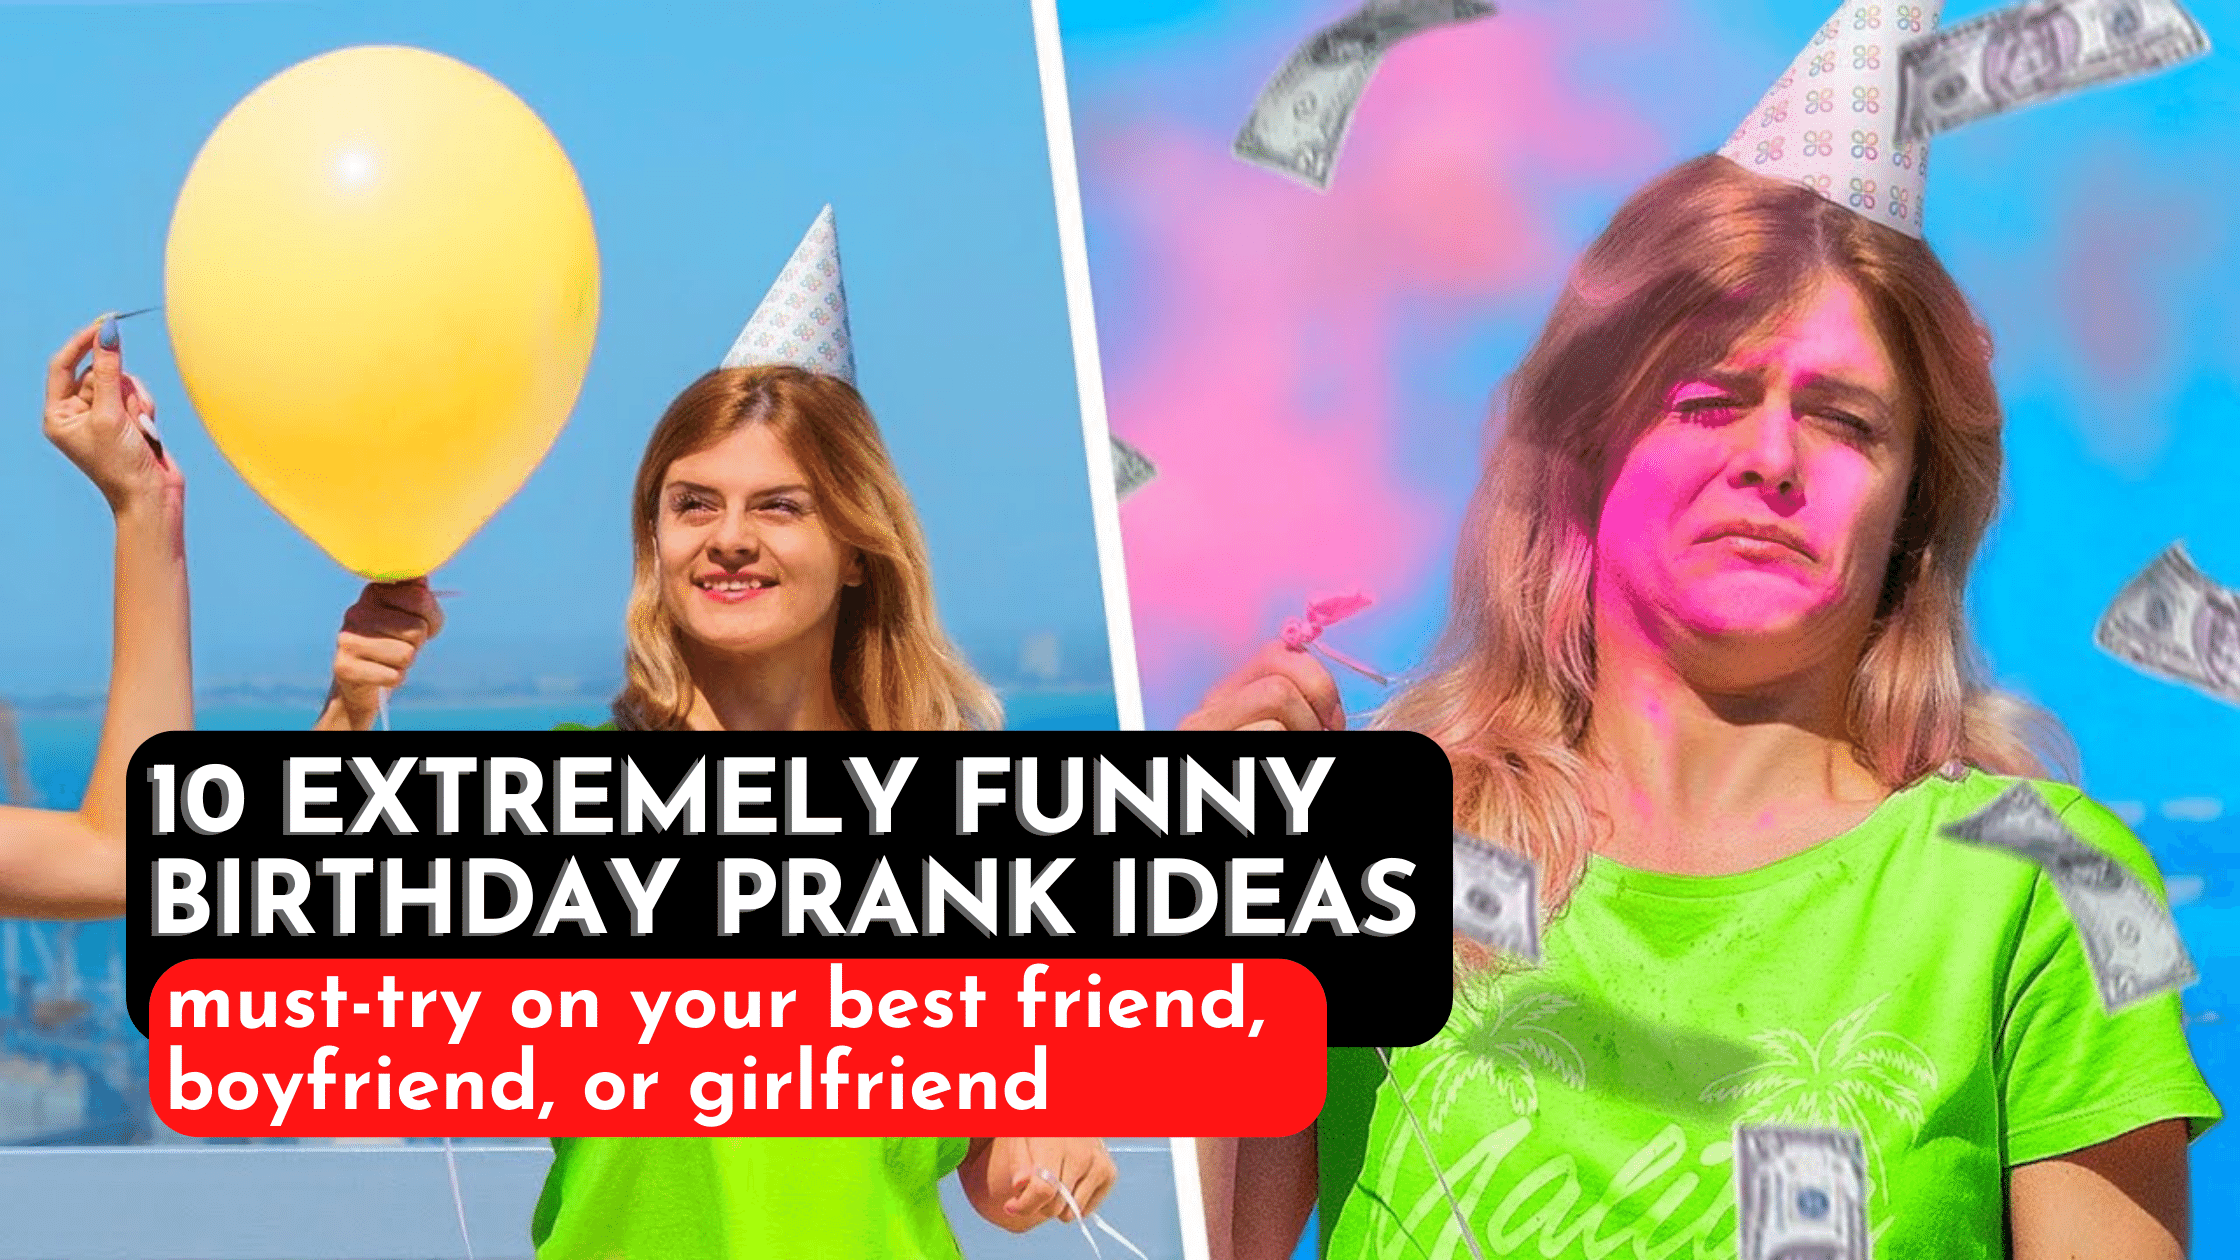 birthday prank ideas feature